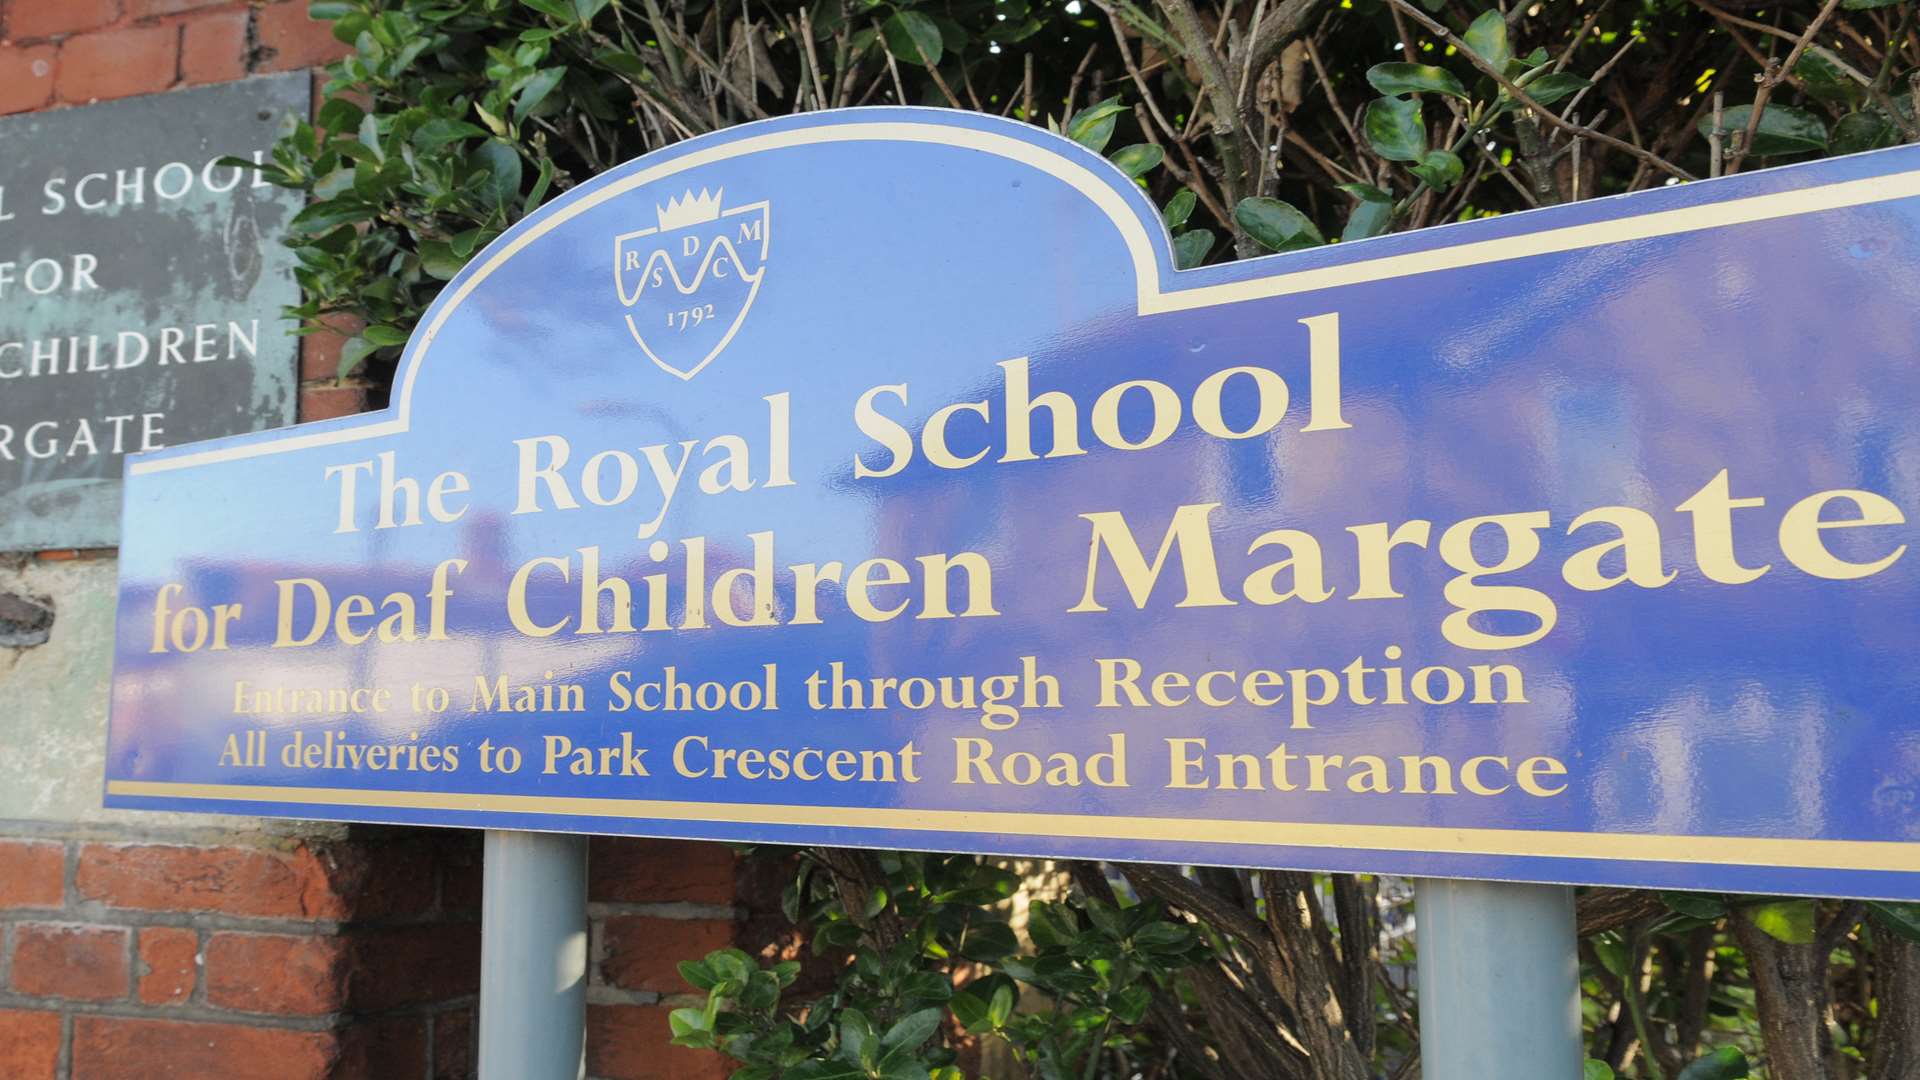 The Royal School for Deaf Children in Margate